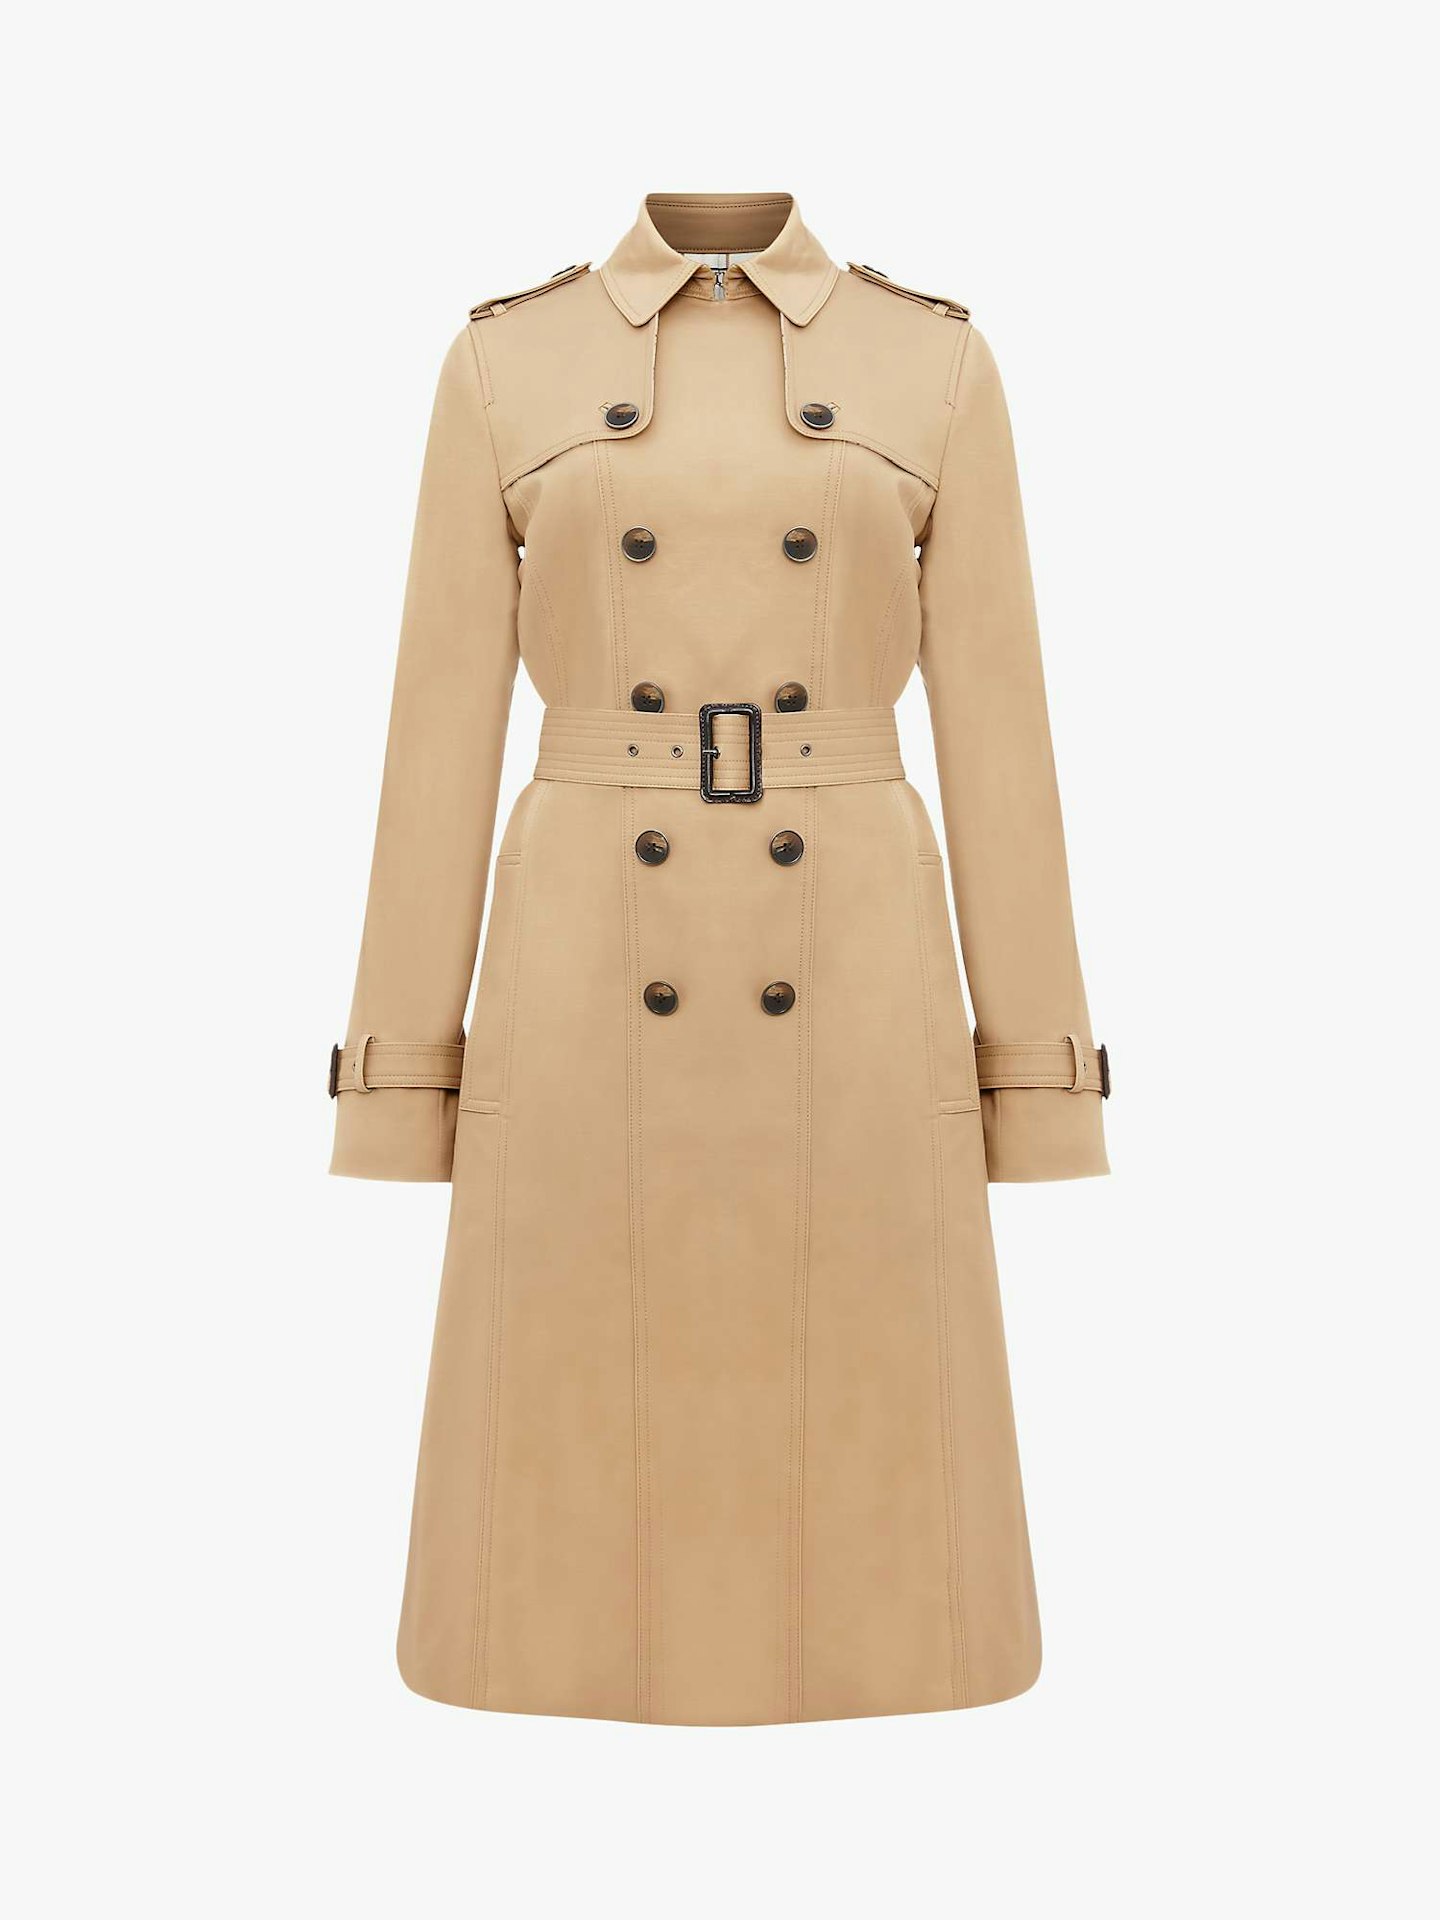 Hobbs, Sofia Trench Coat, £249